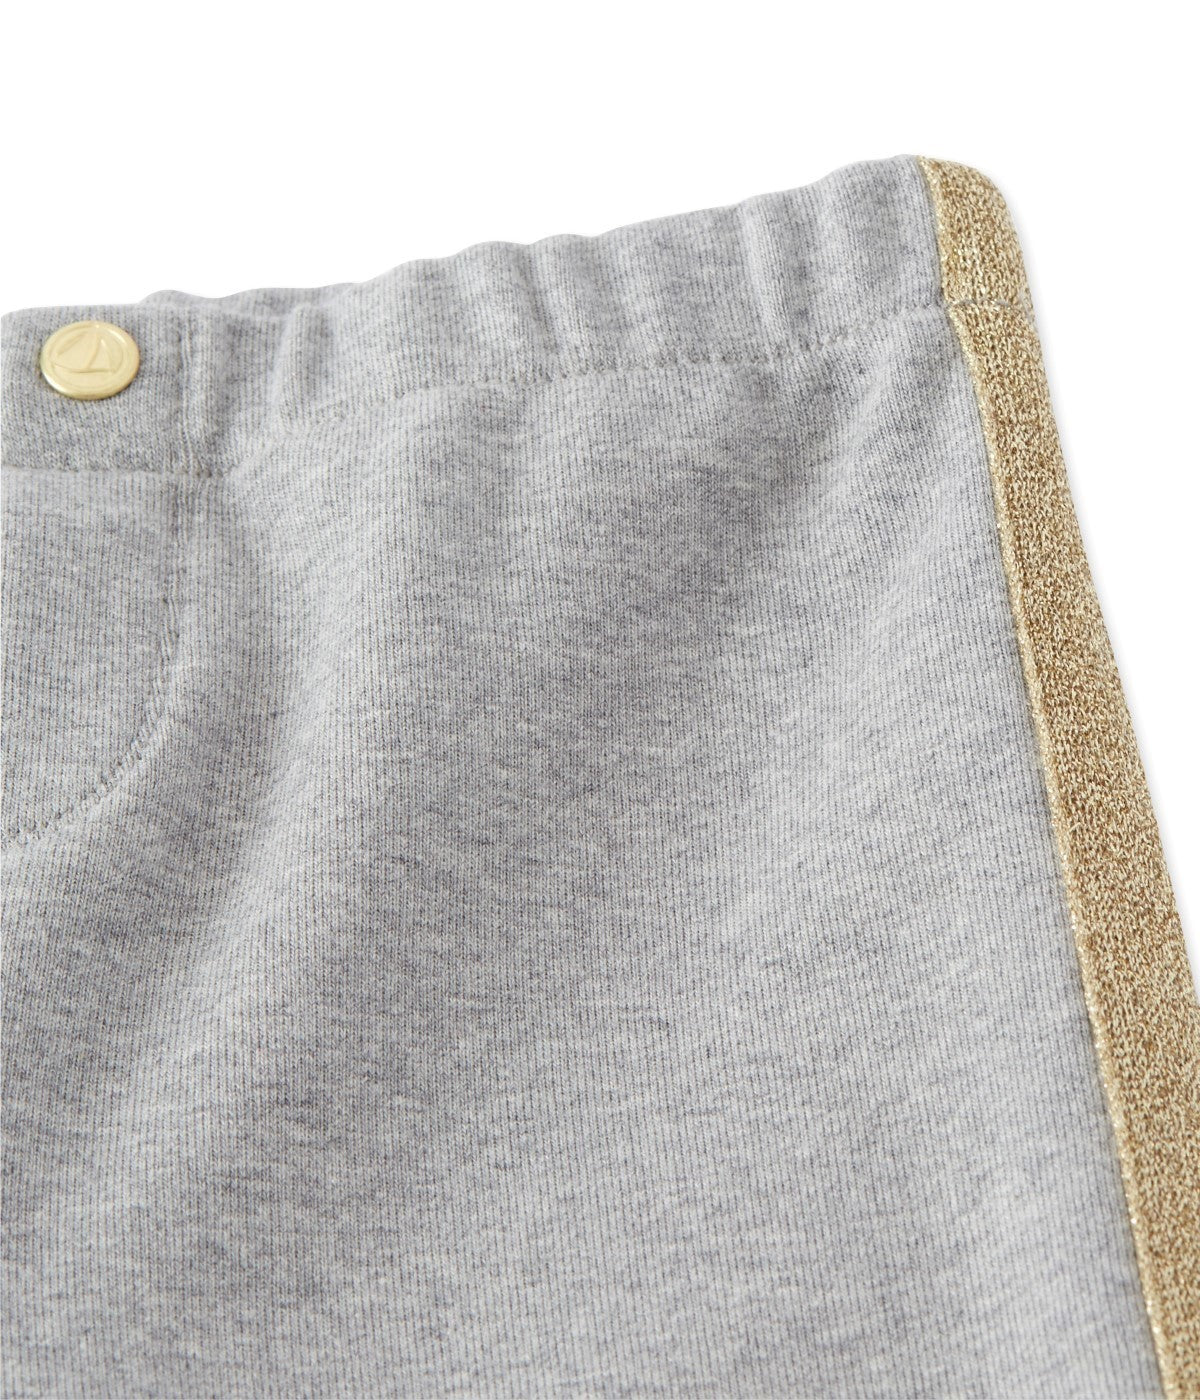 Petit Bateau Girls Pants with Gold Side Details (Size 8, 10, 12)